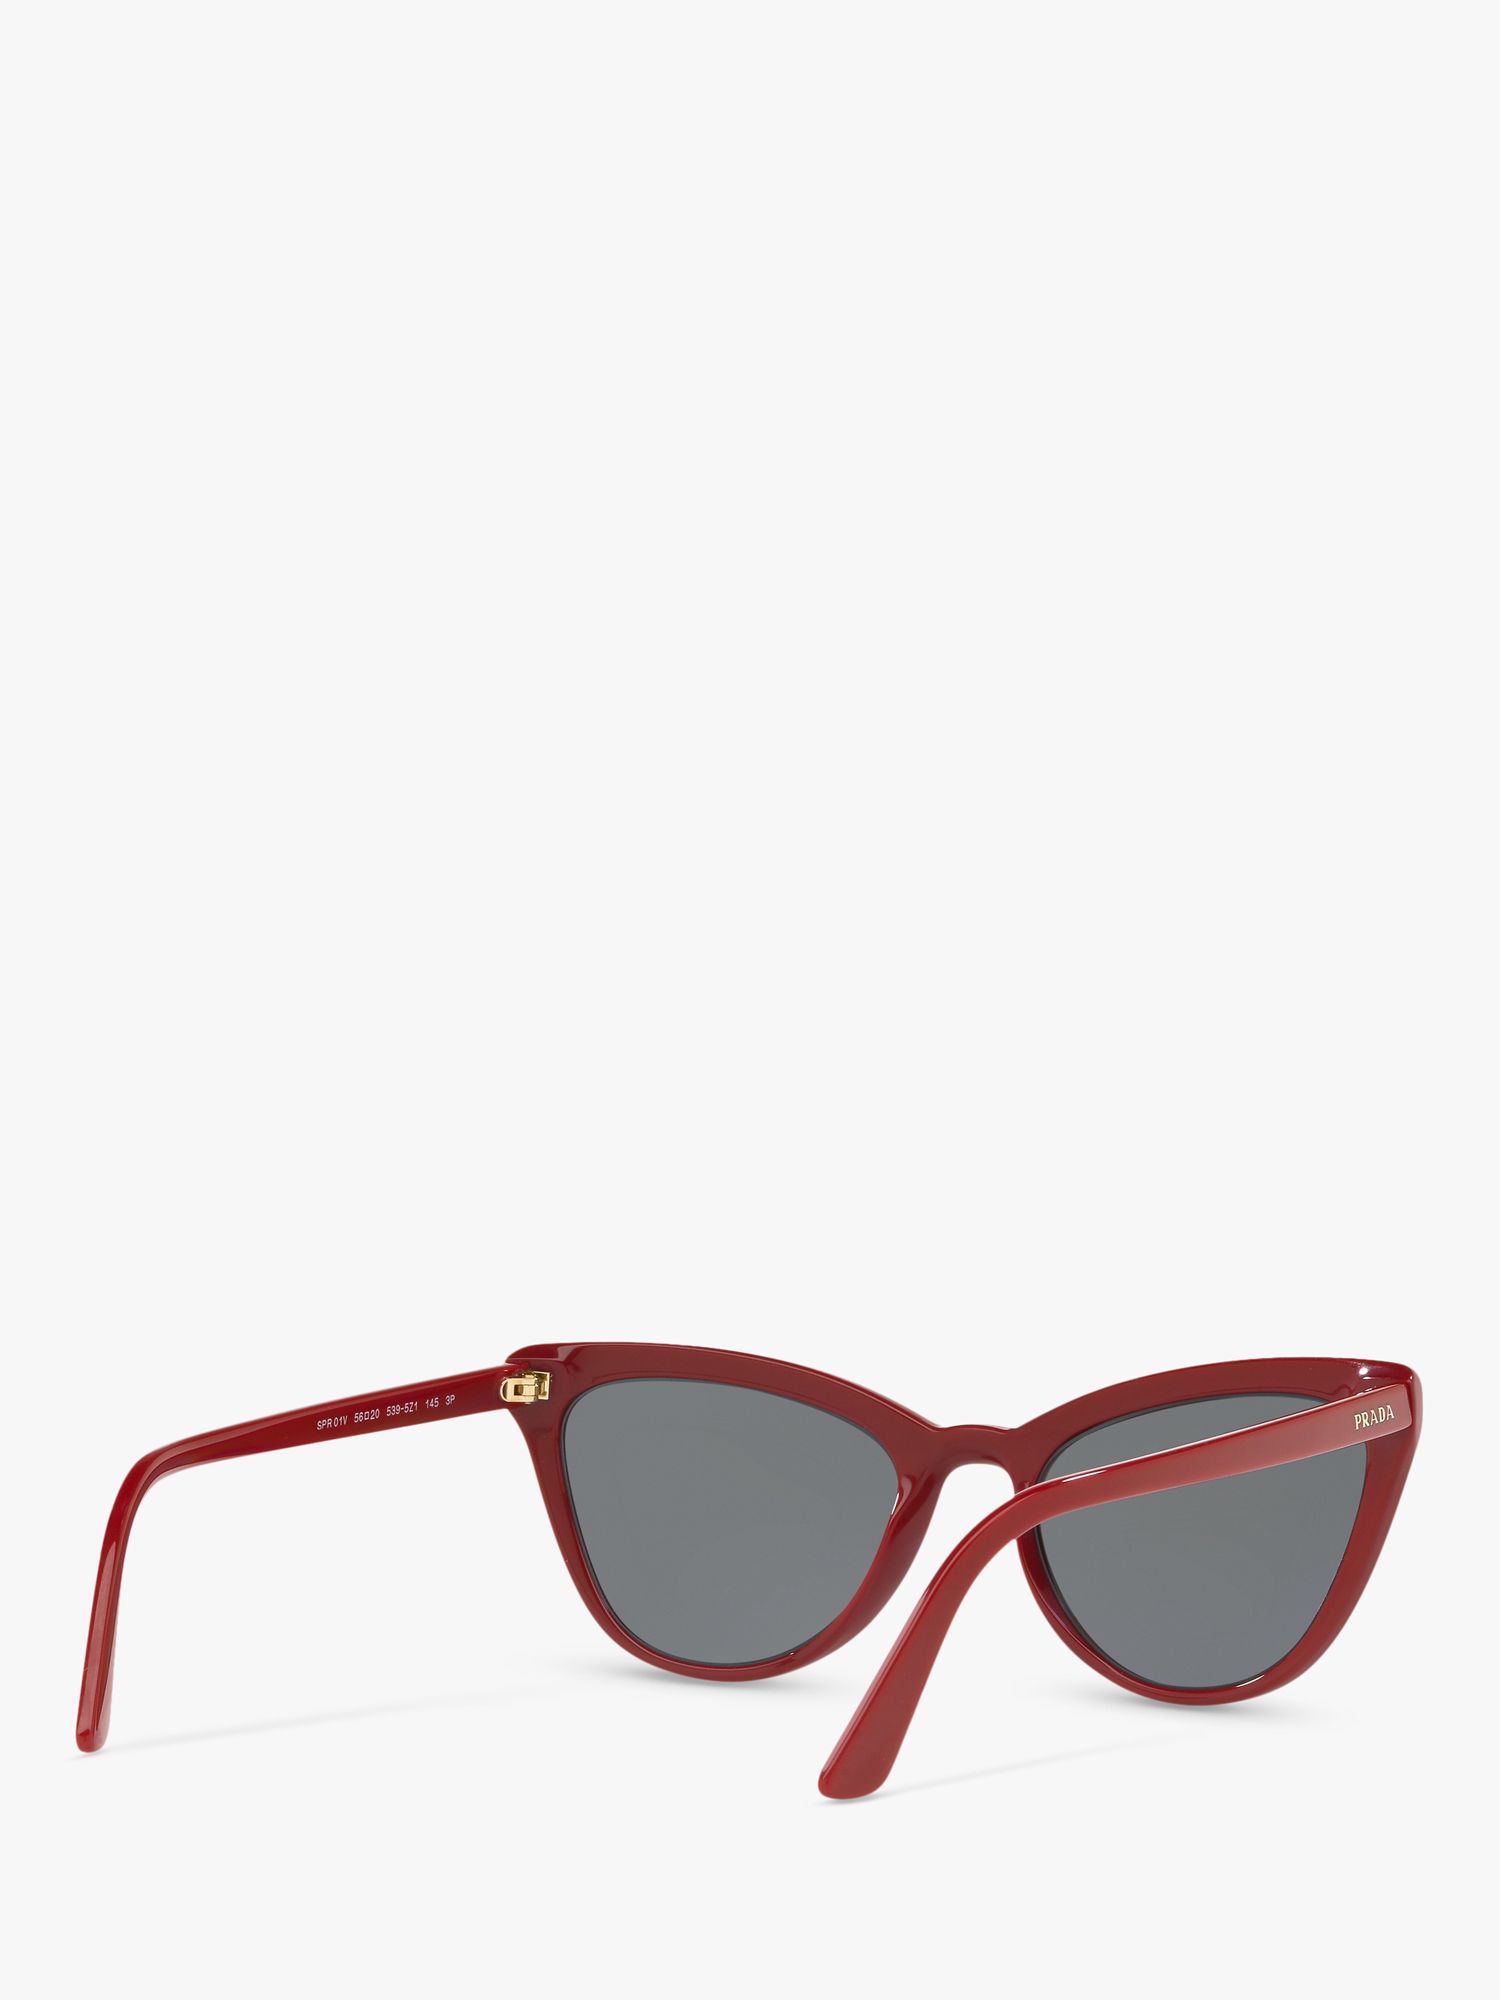 Prada PR 01VS Women's Polarised Cat's Eye Sunglasses, Red/Grey at John Lewis & Partners